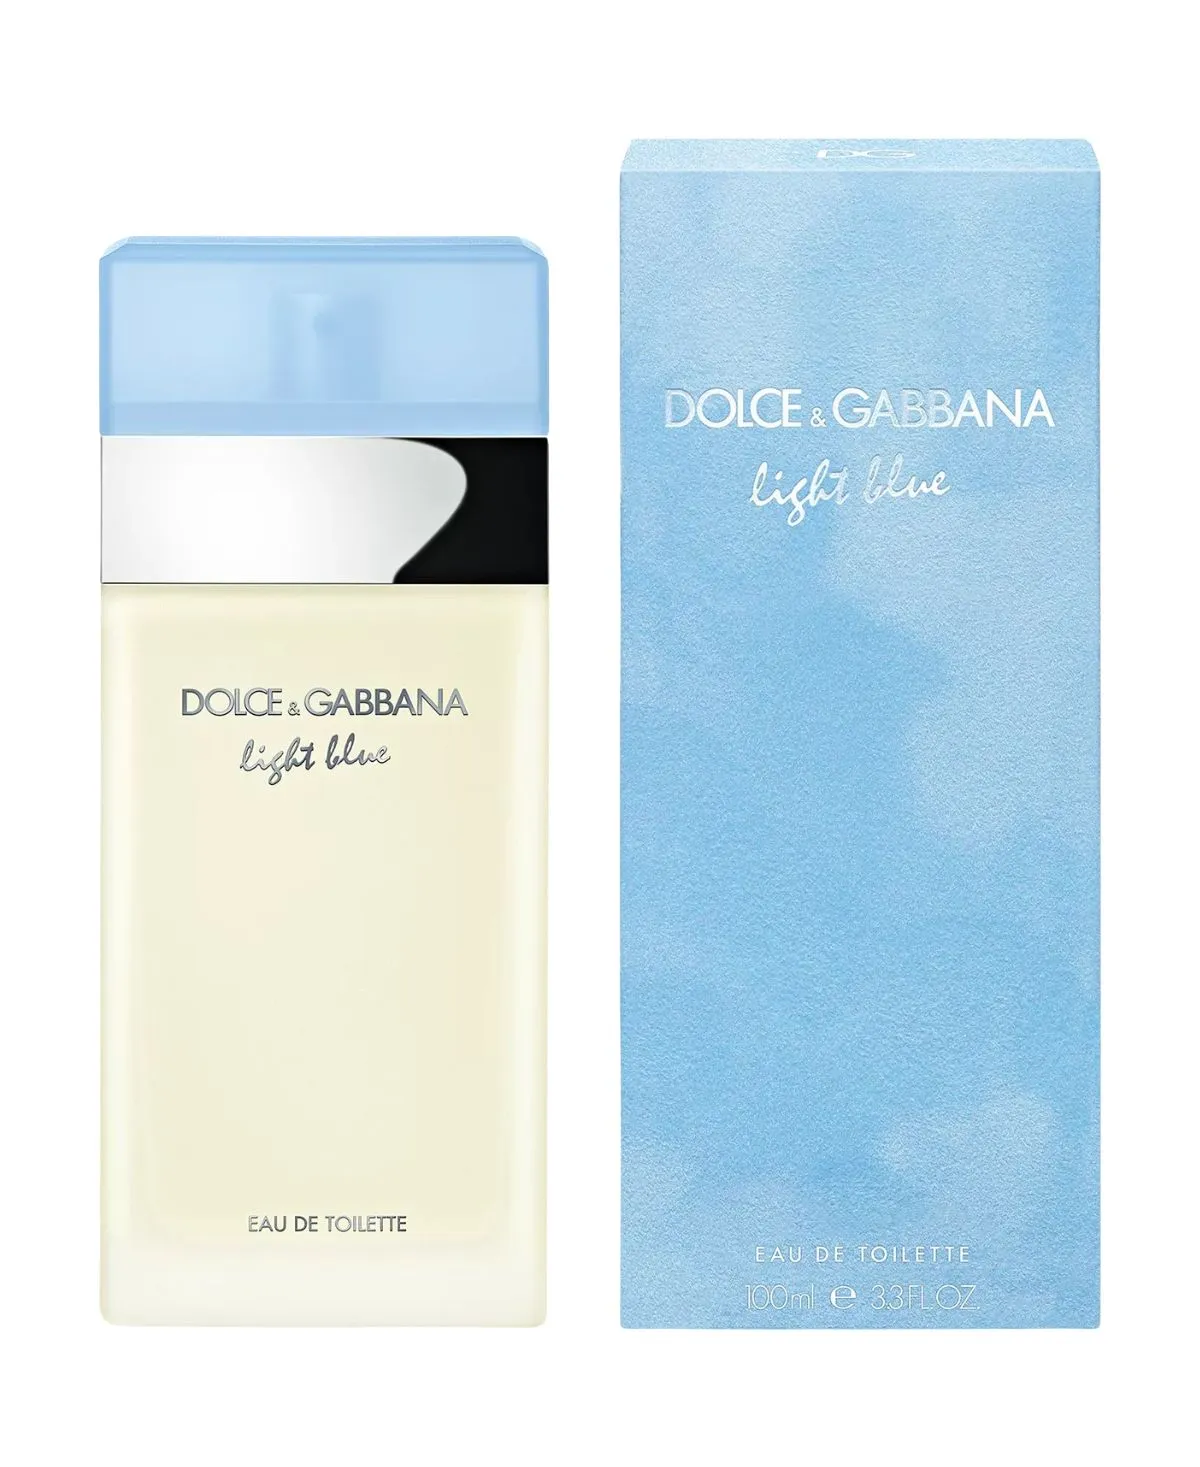 Dolce & Gabbana Light Blue for Women Eau de Toilette (EDT) Spray 3.4 oz (100 ml) 3423473020233